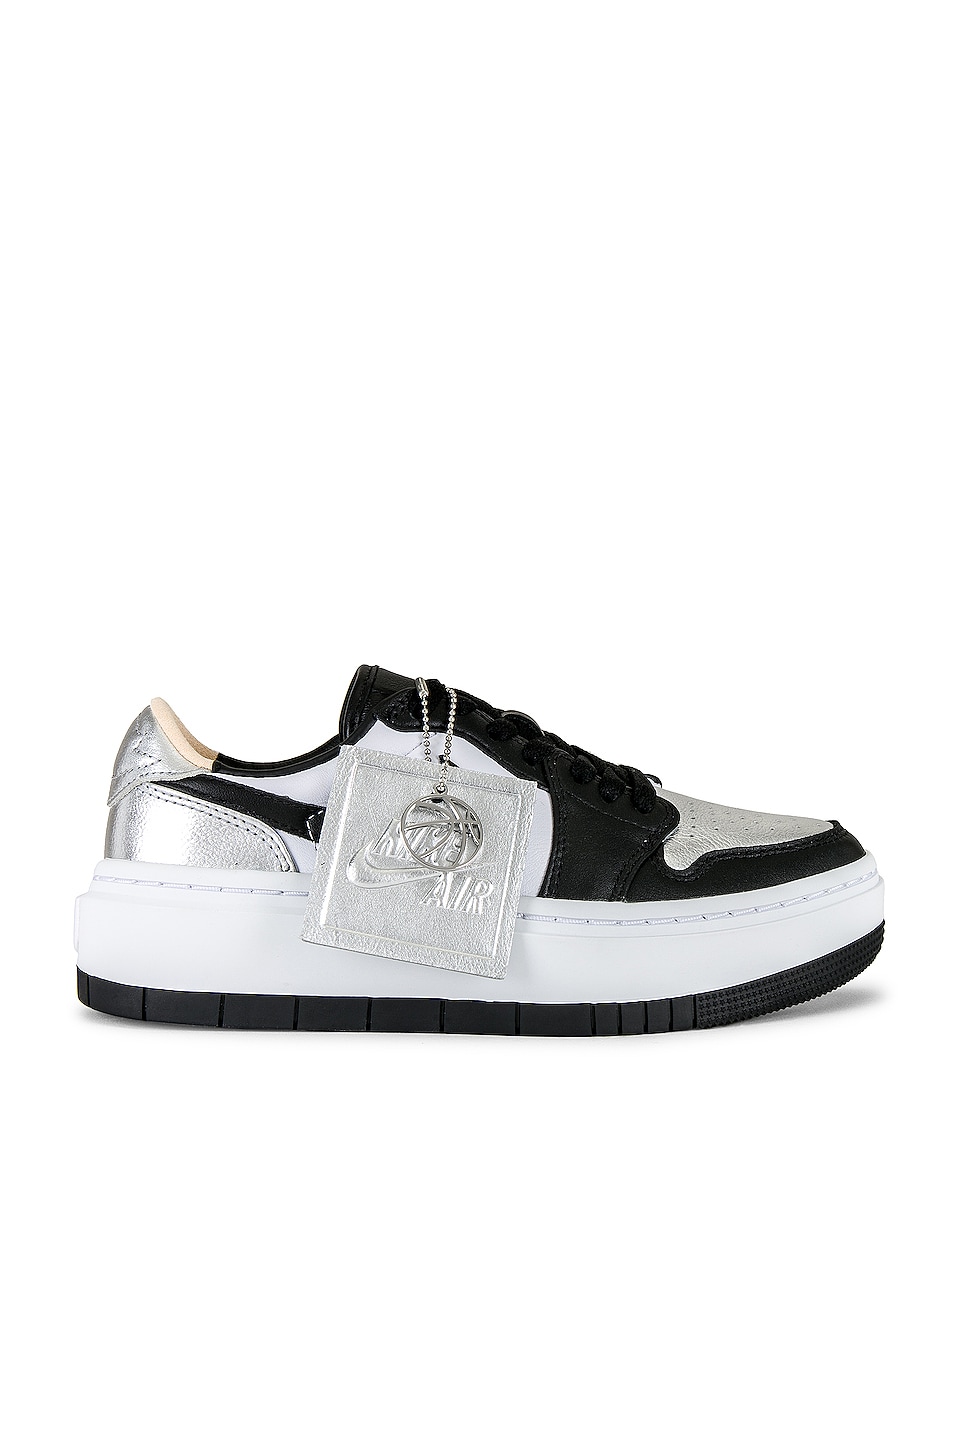 White, silver and black Nike Air Jordan 1 Elevate Low Sneaker